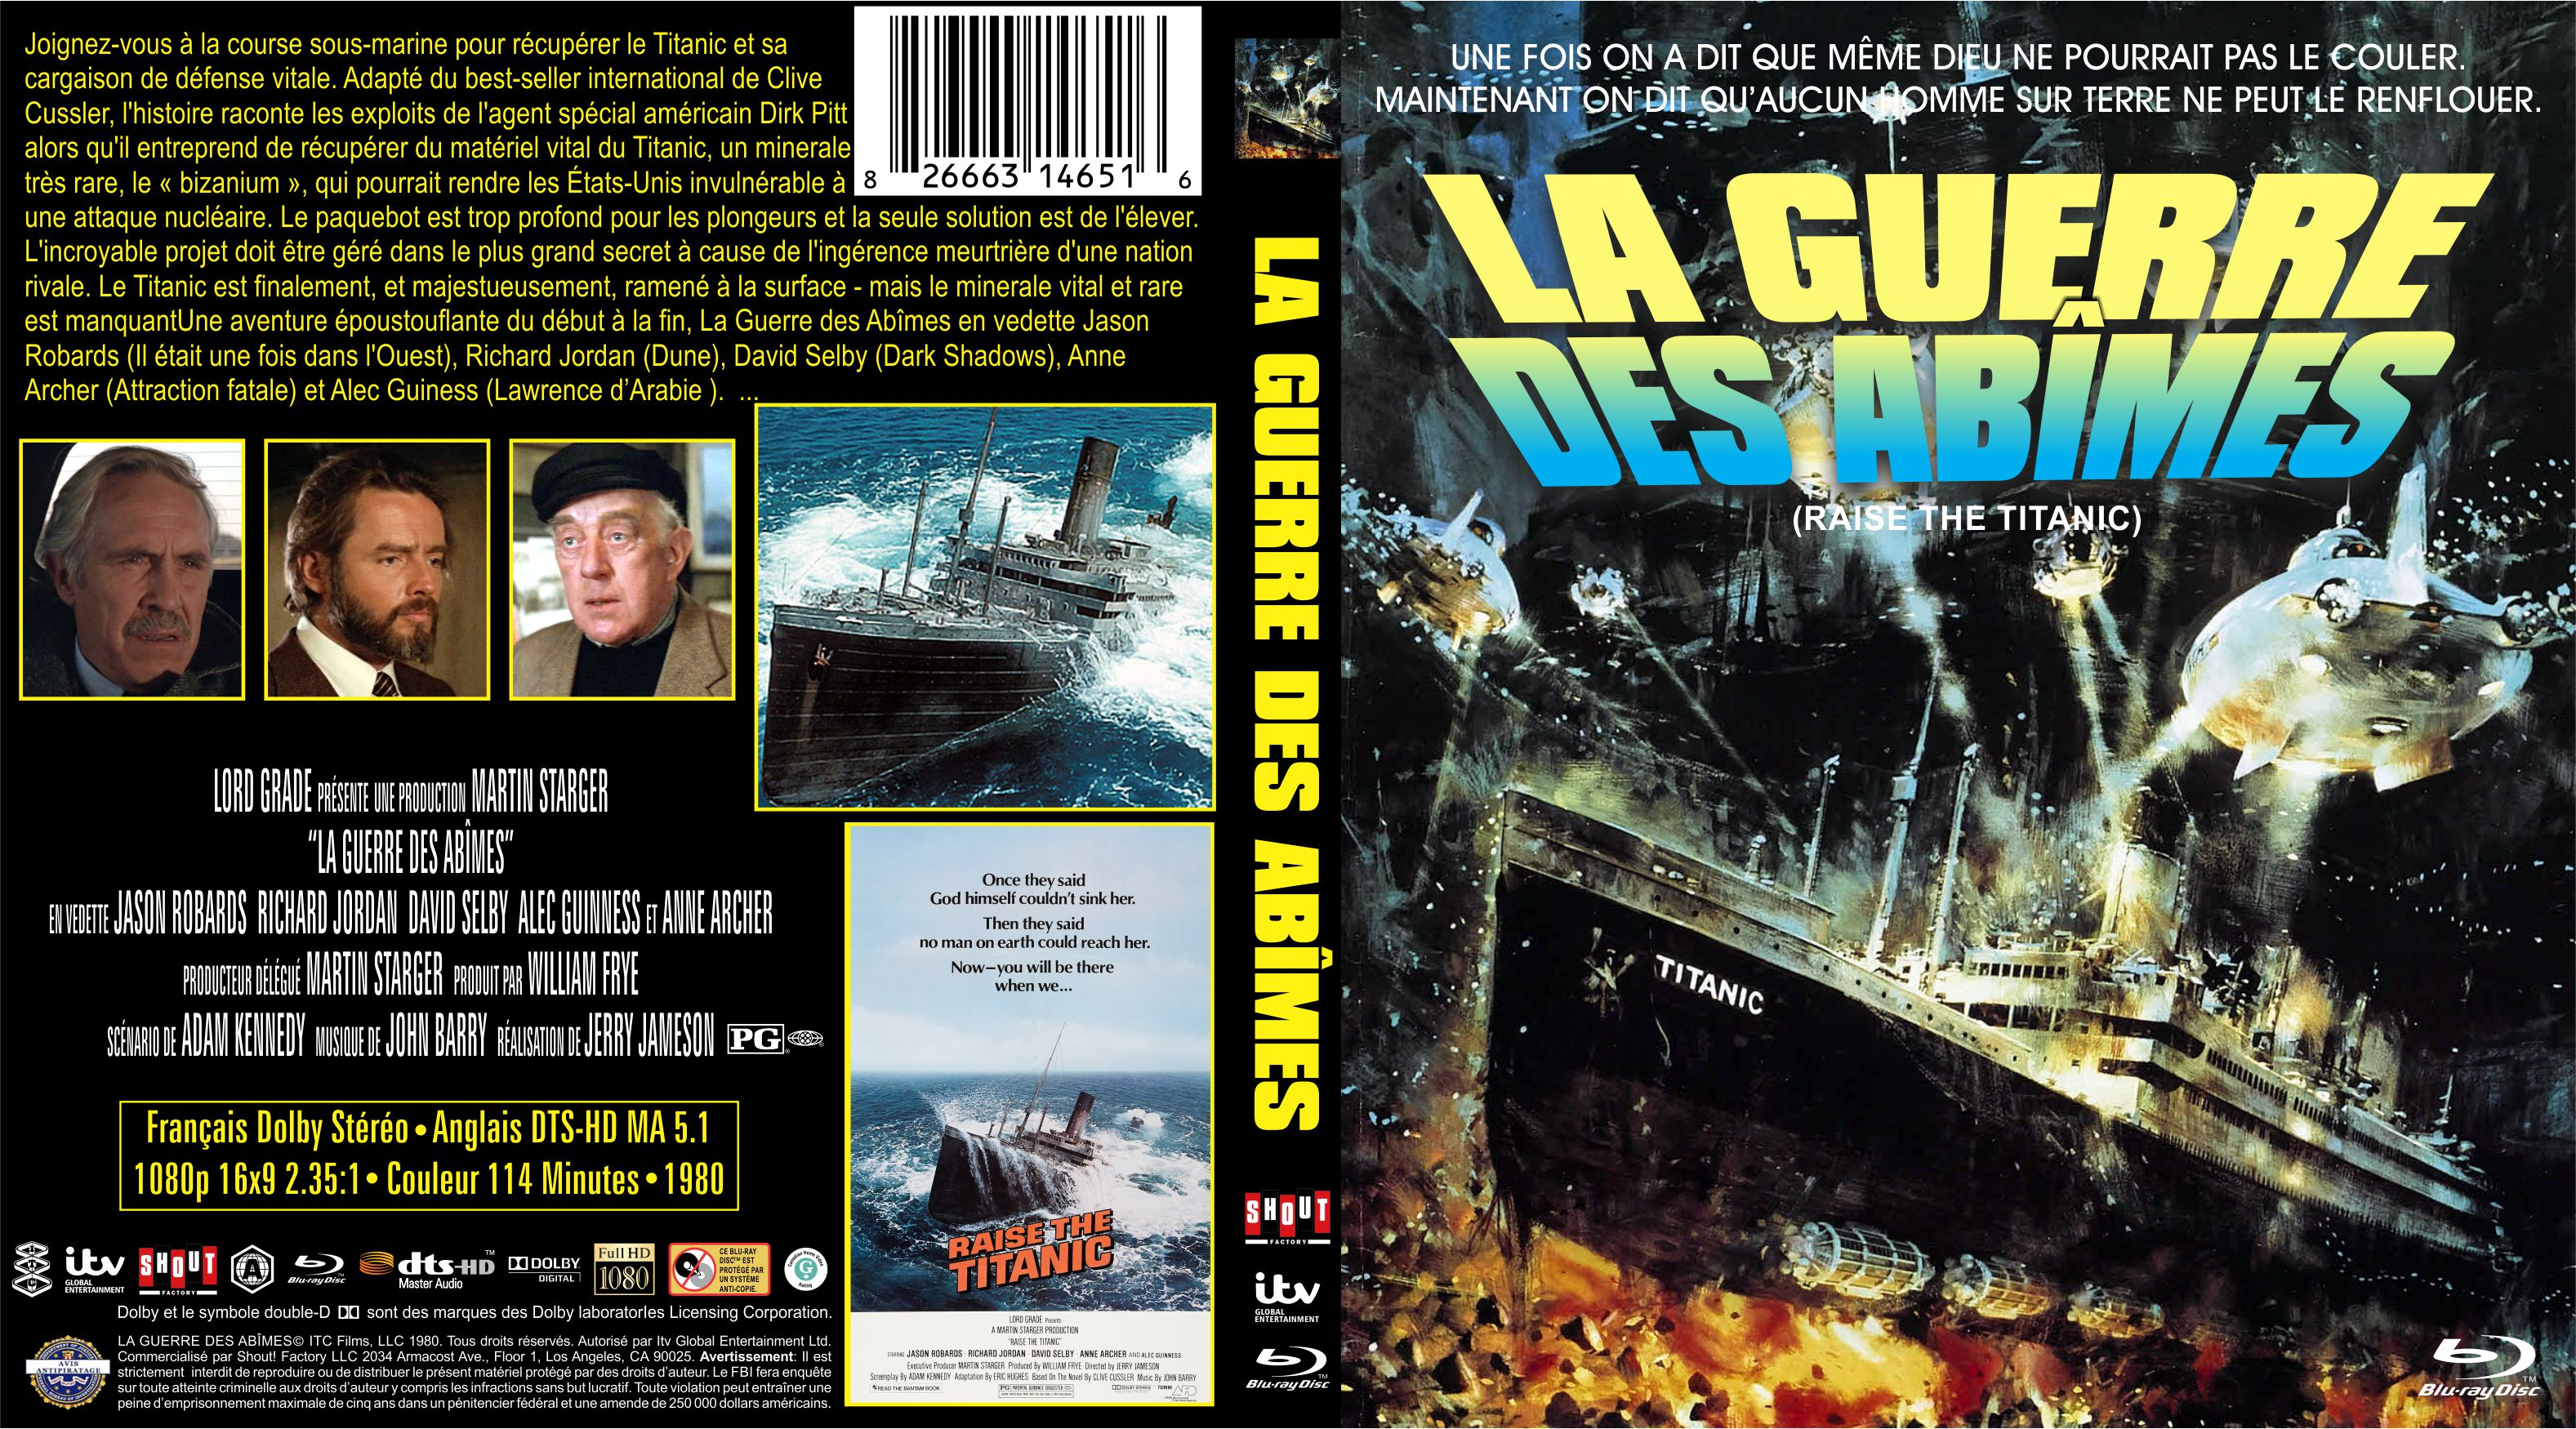 Jaquette DVD La guerre des abimes custom (BLU-RAY)